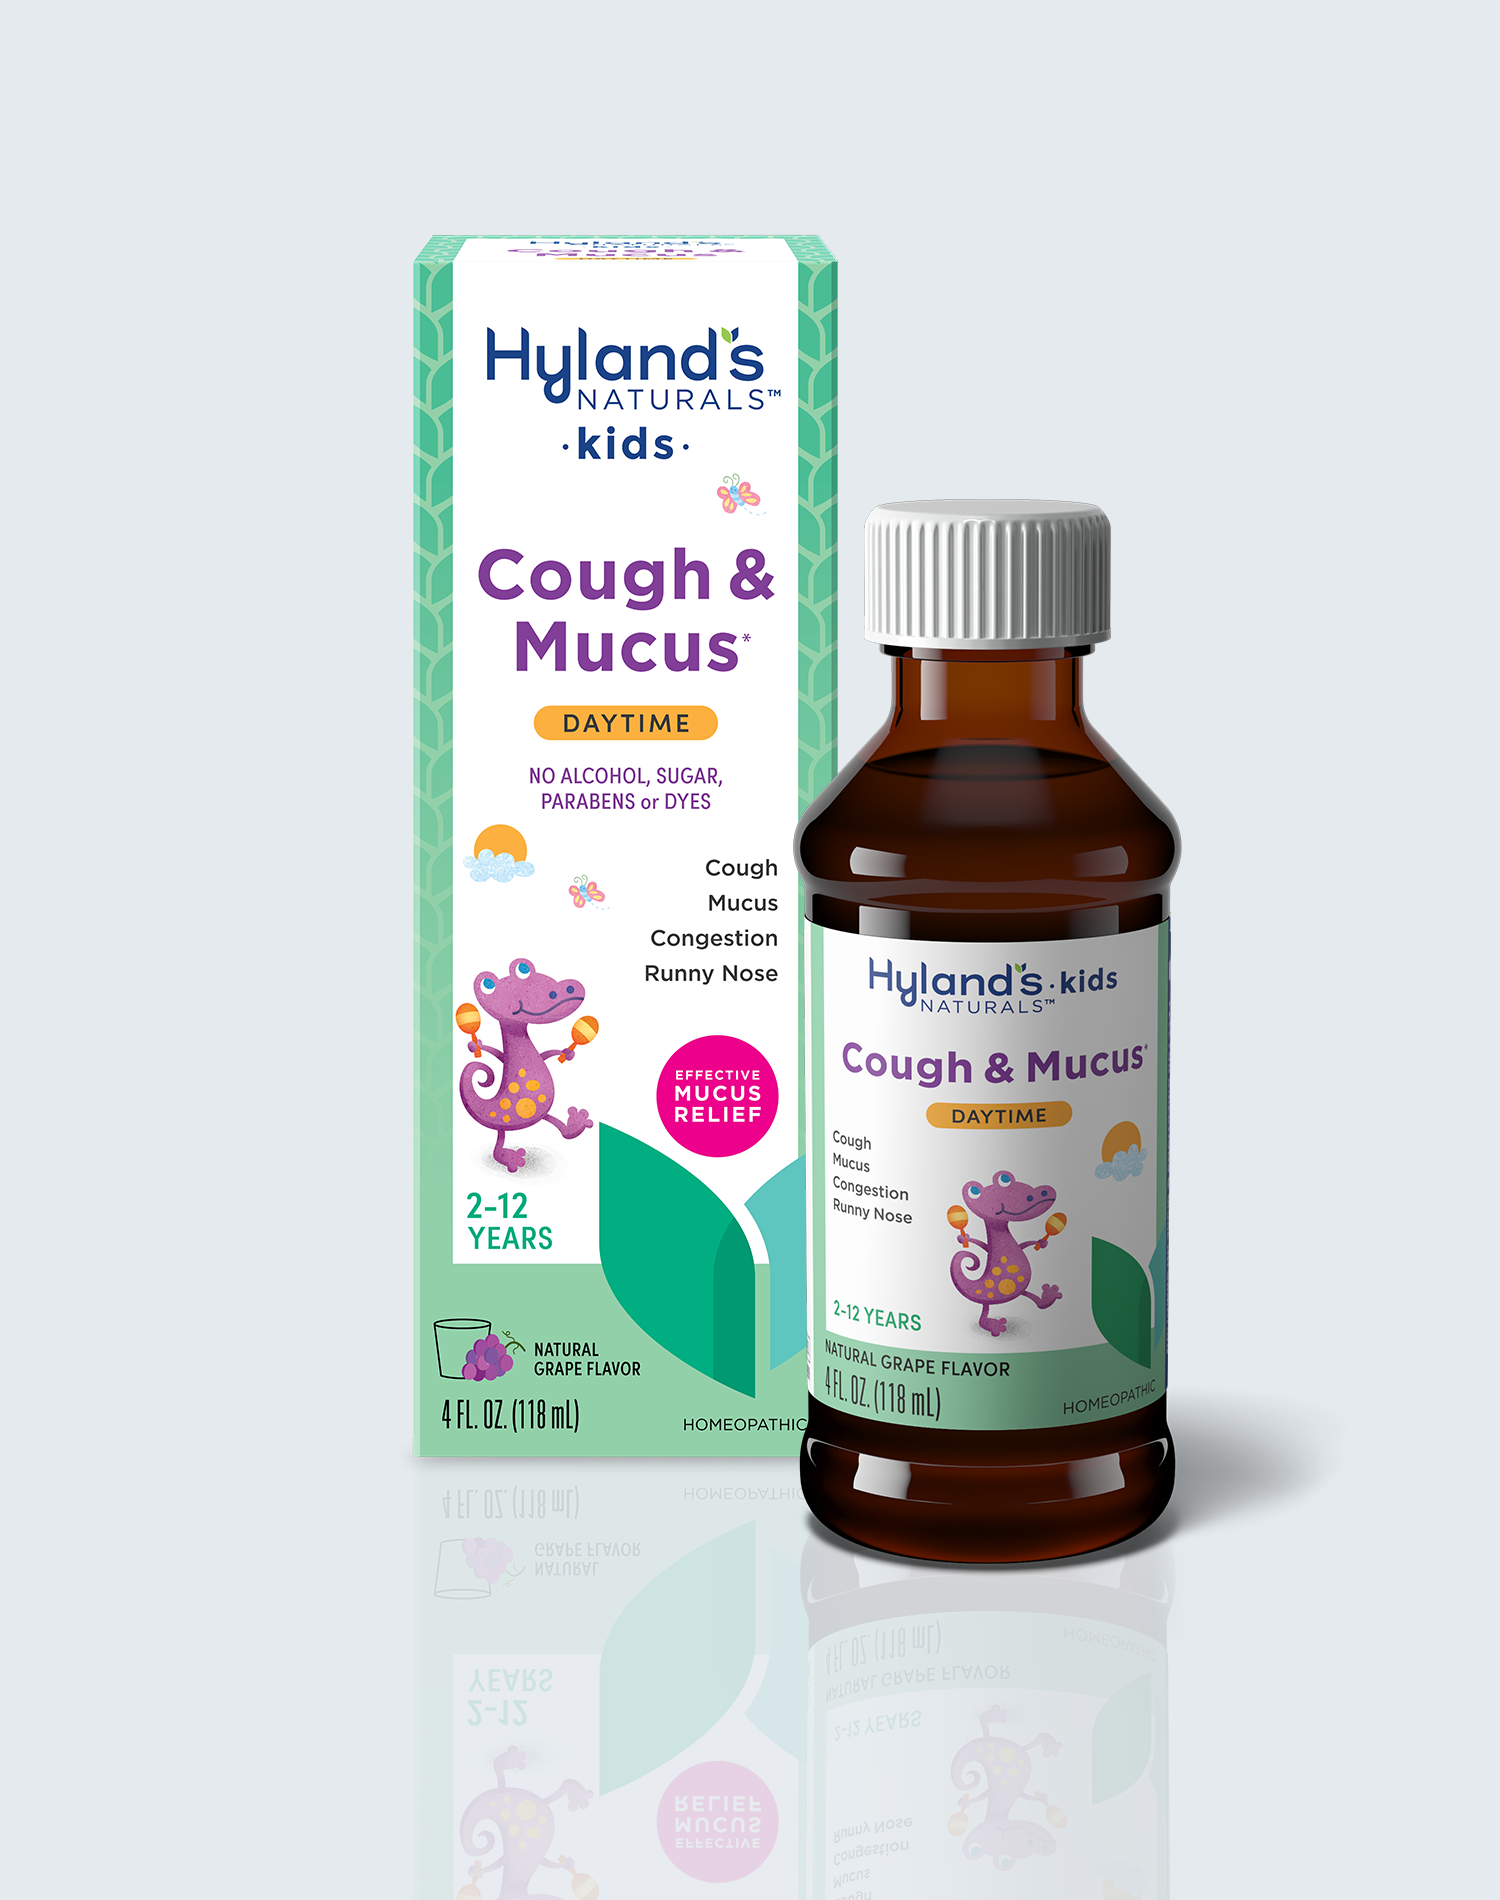 Hyland's Naturals Baby Cough Syrup Daytime 6+ Months - Jarabe para